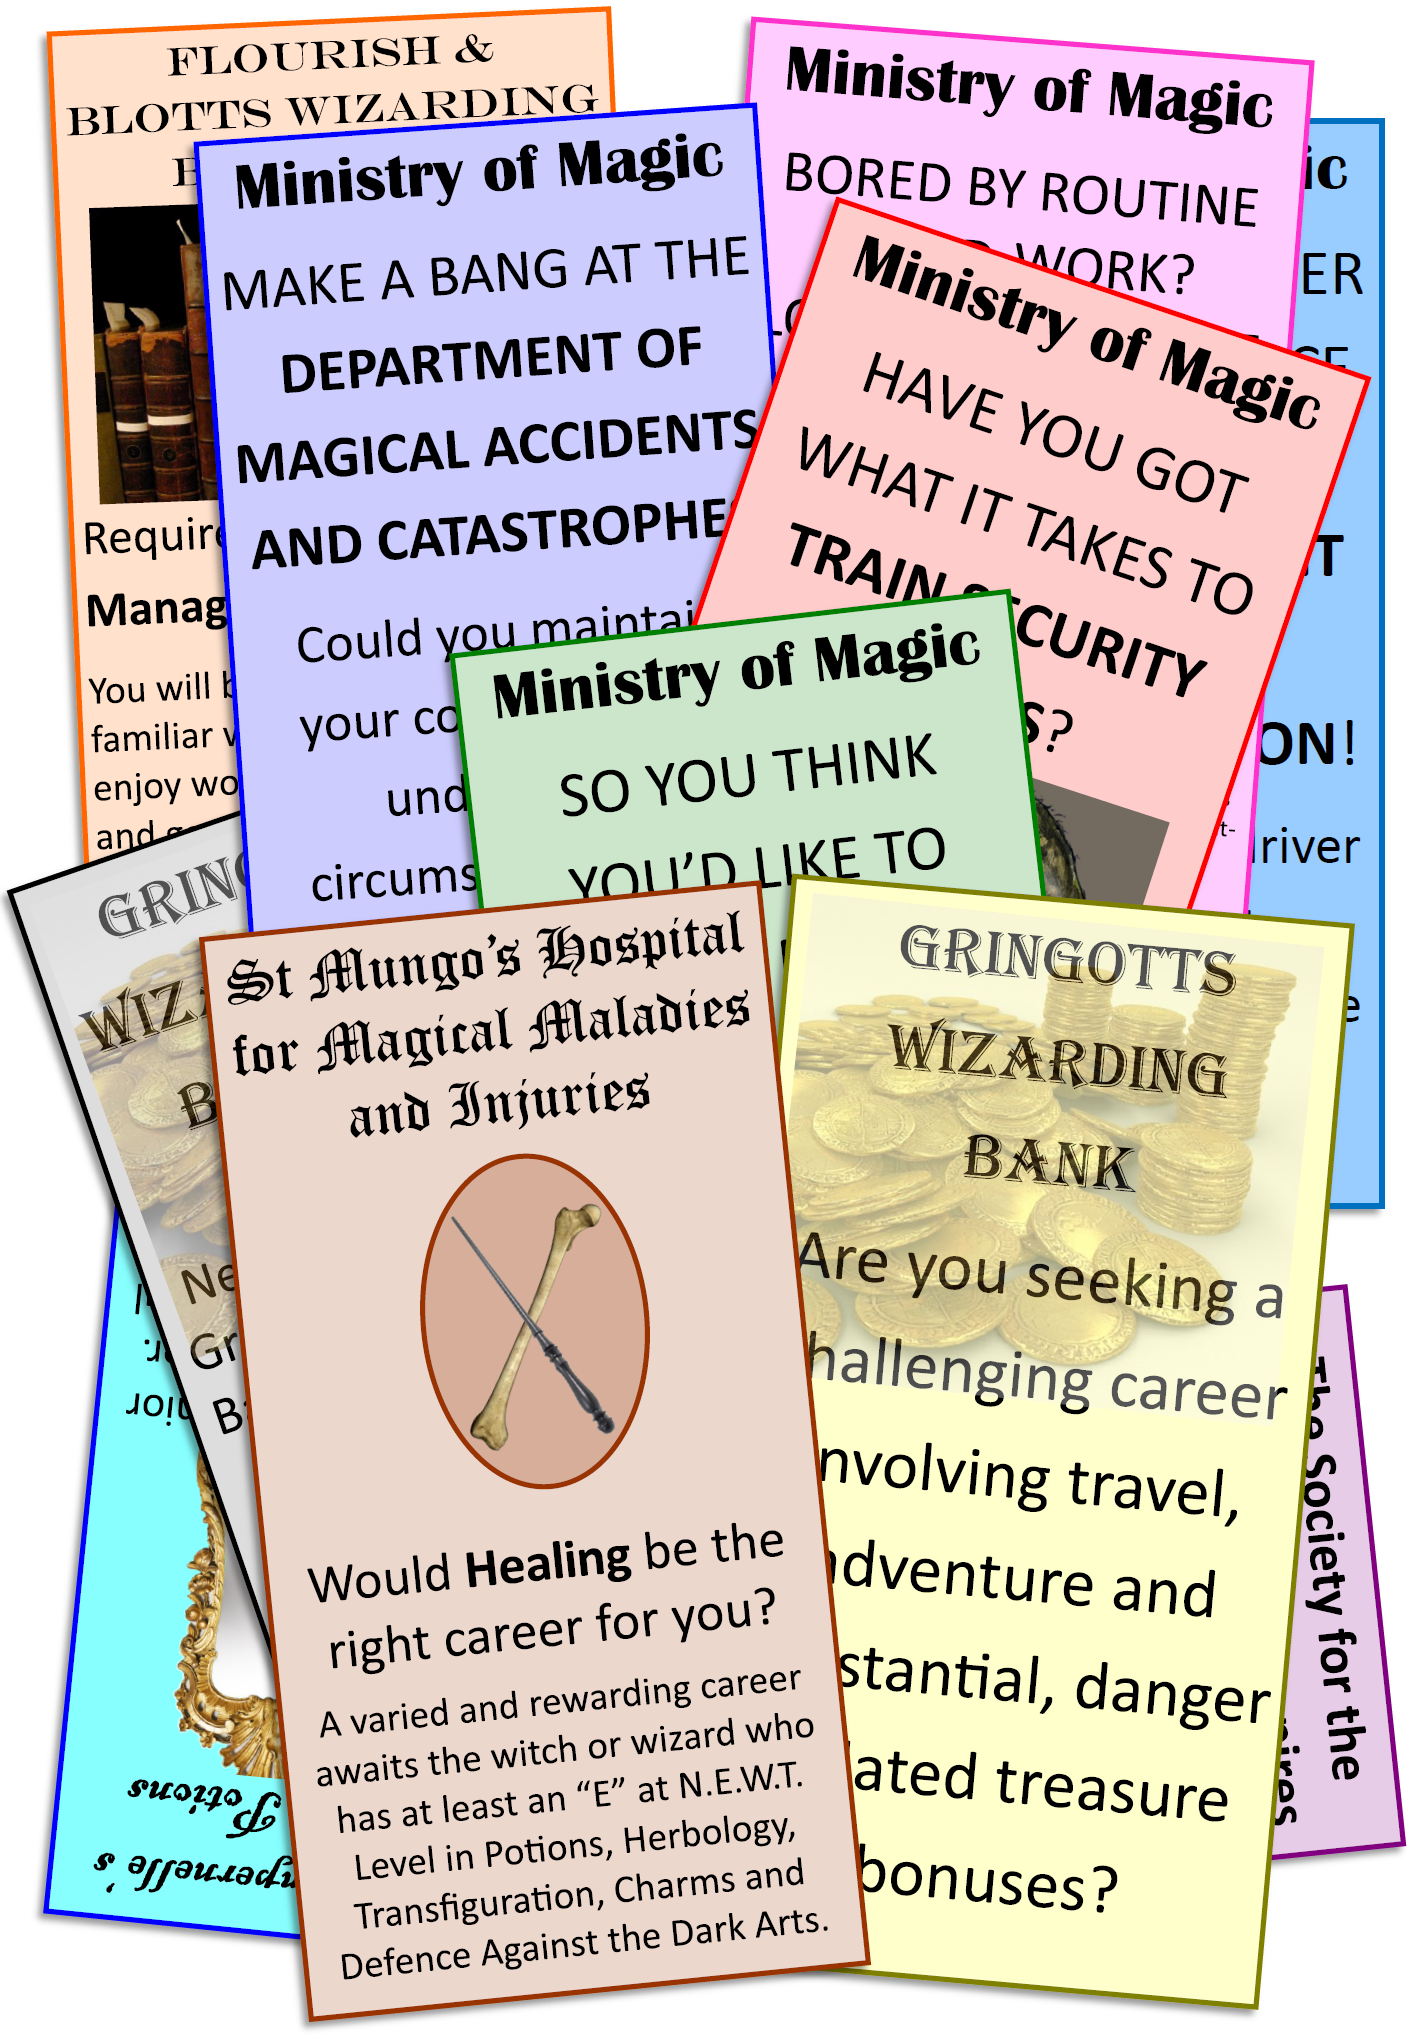 Career Advice pamphlets